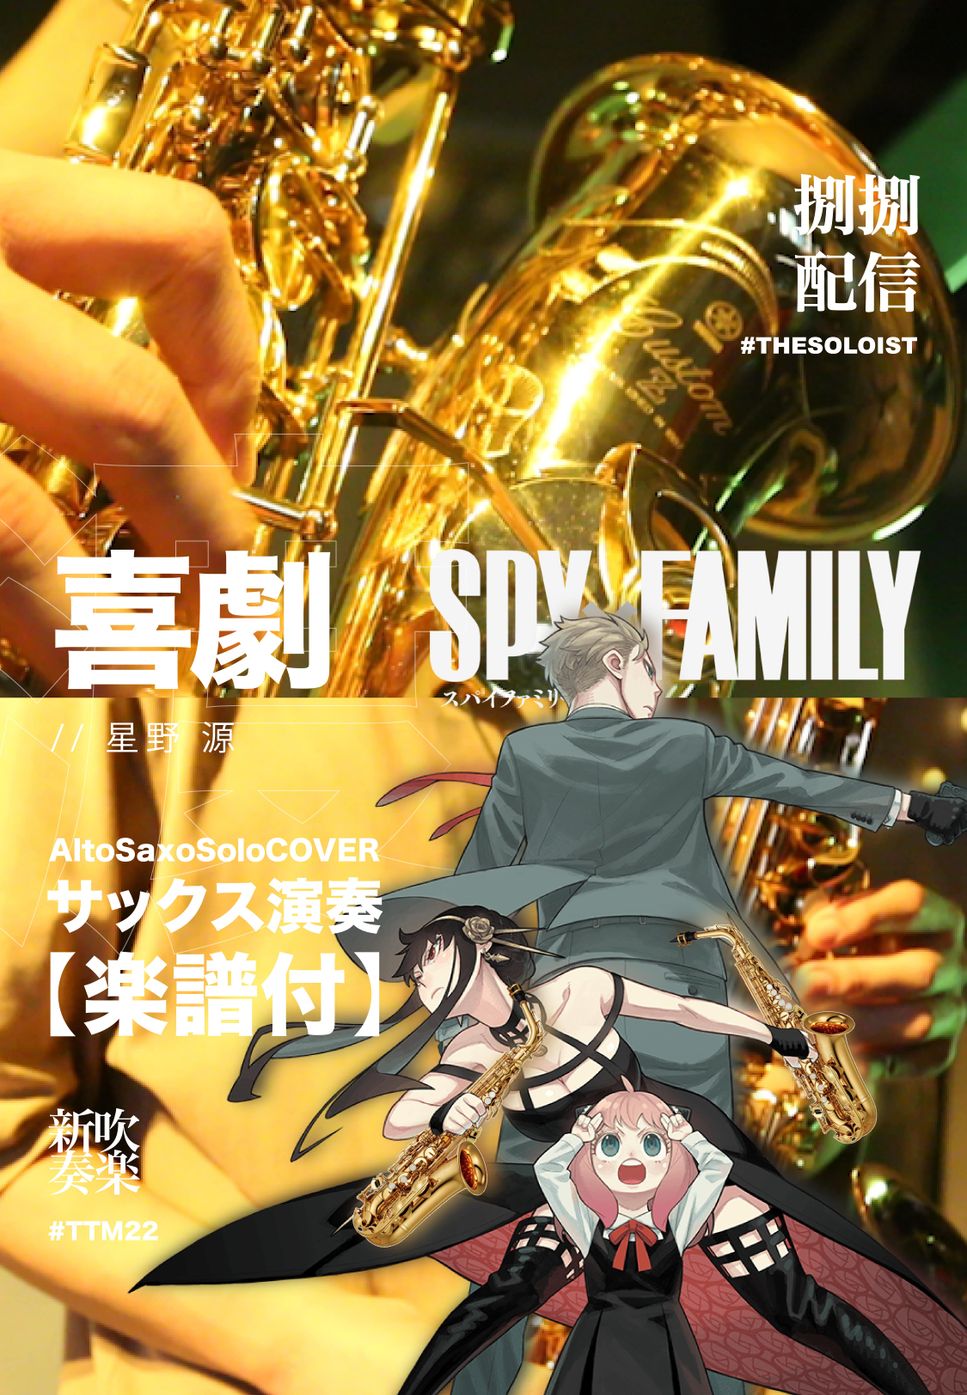 SoyxFamily - 喜劇 (サックス演奏) by FungYip